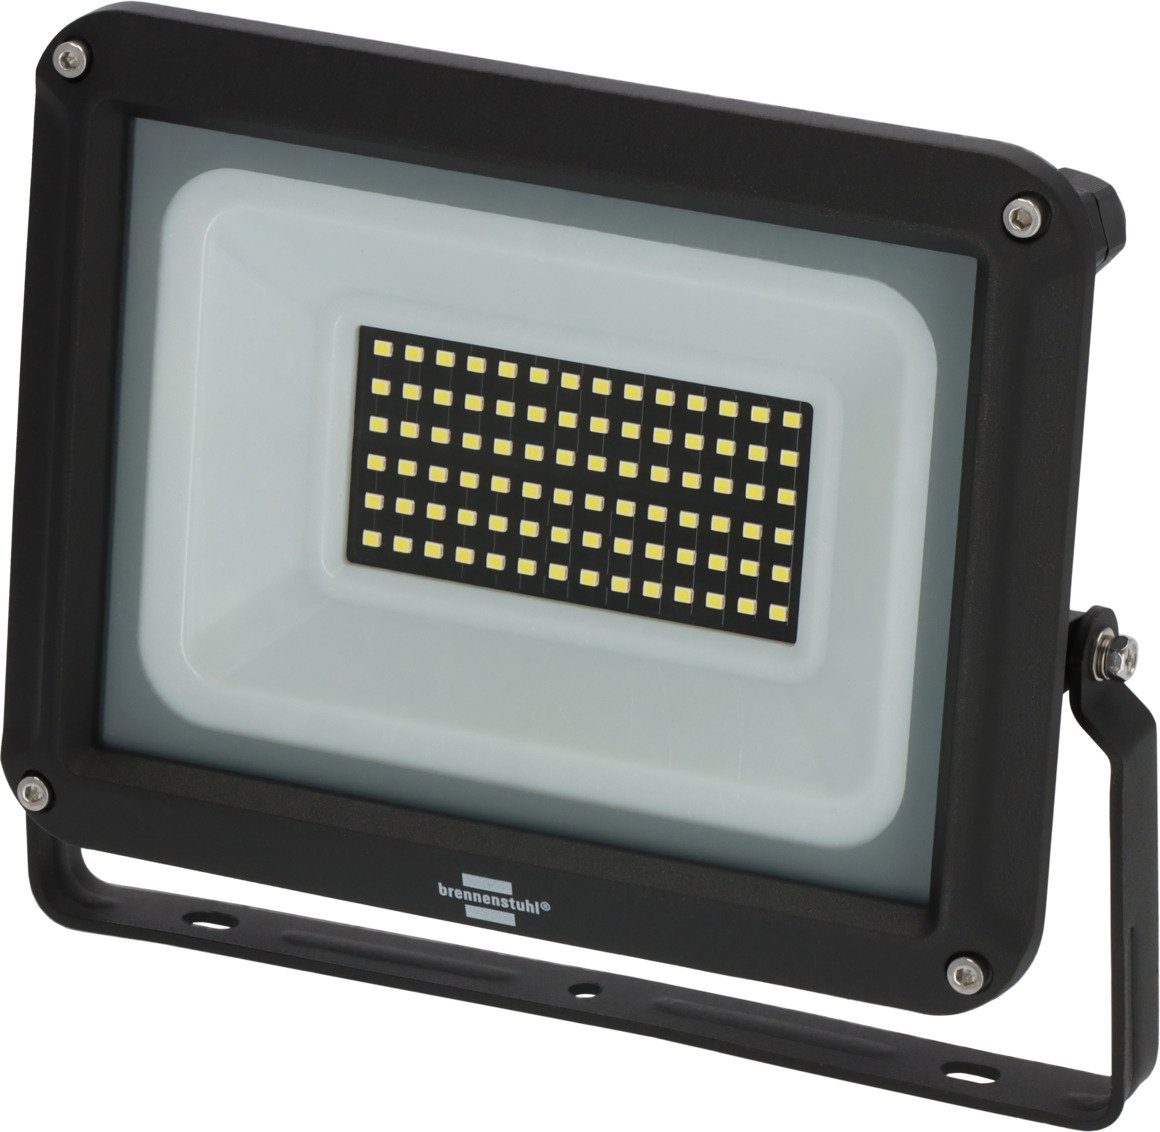 W, Brennenstuhl fest LED Wandstrahler integriert, JARO 50 7060, außen LED für